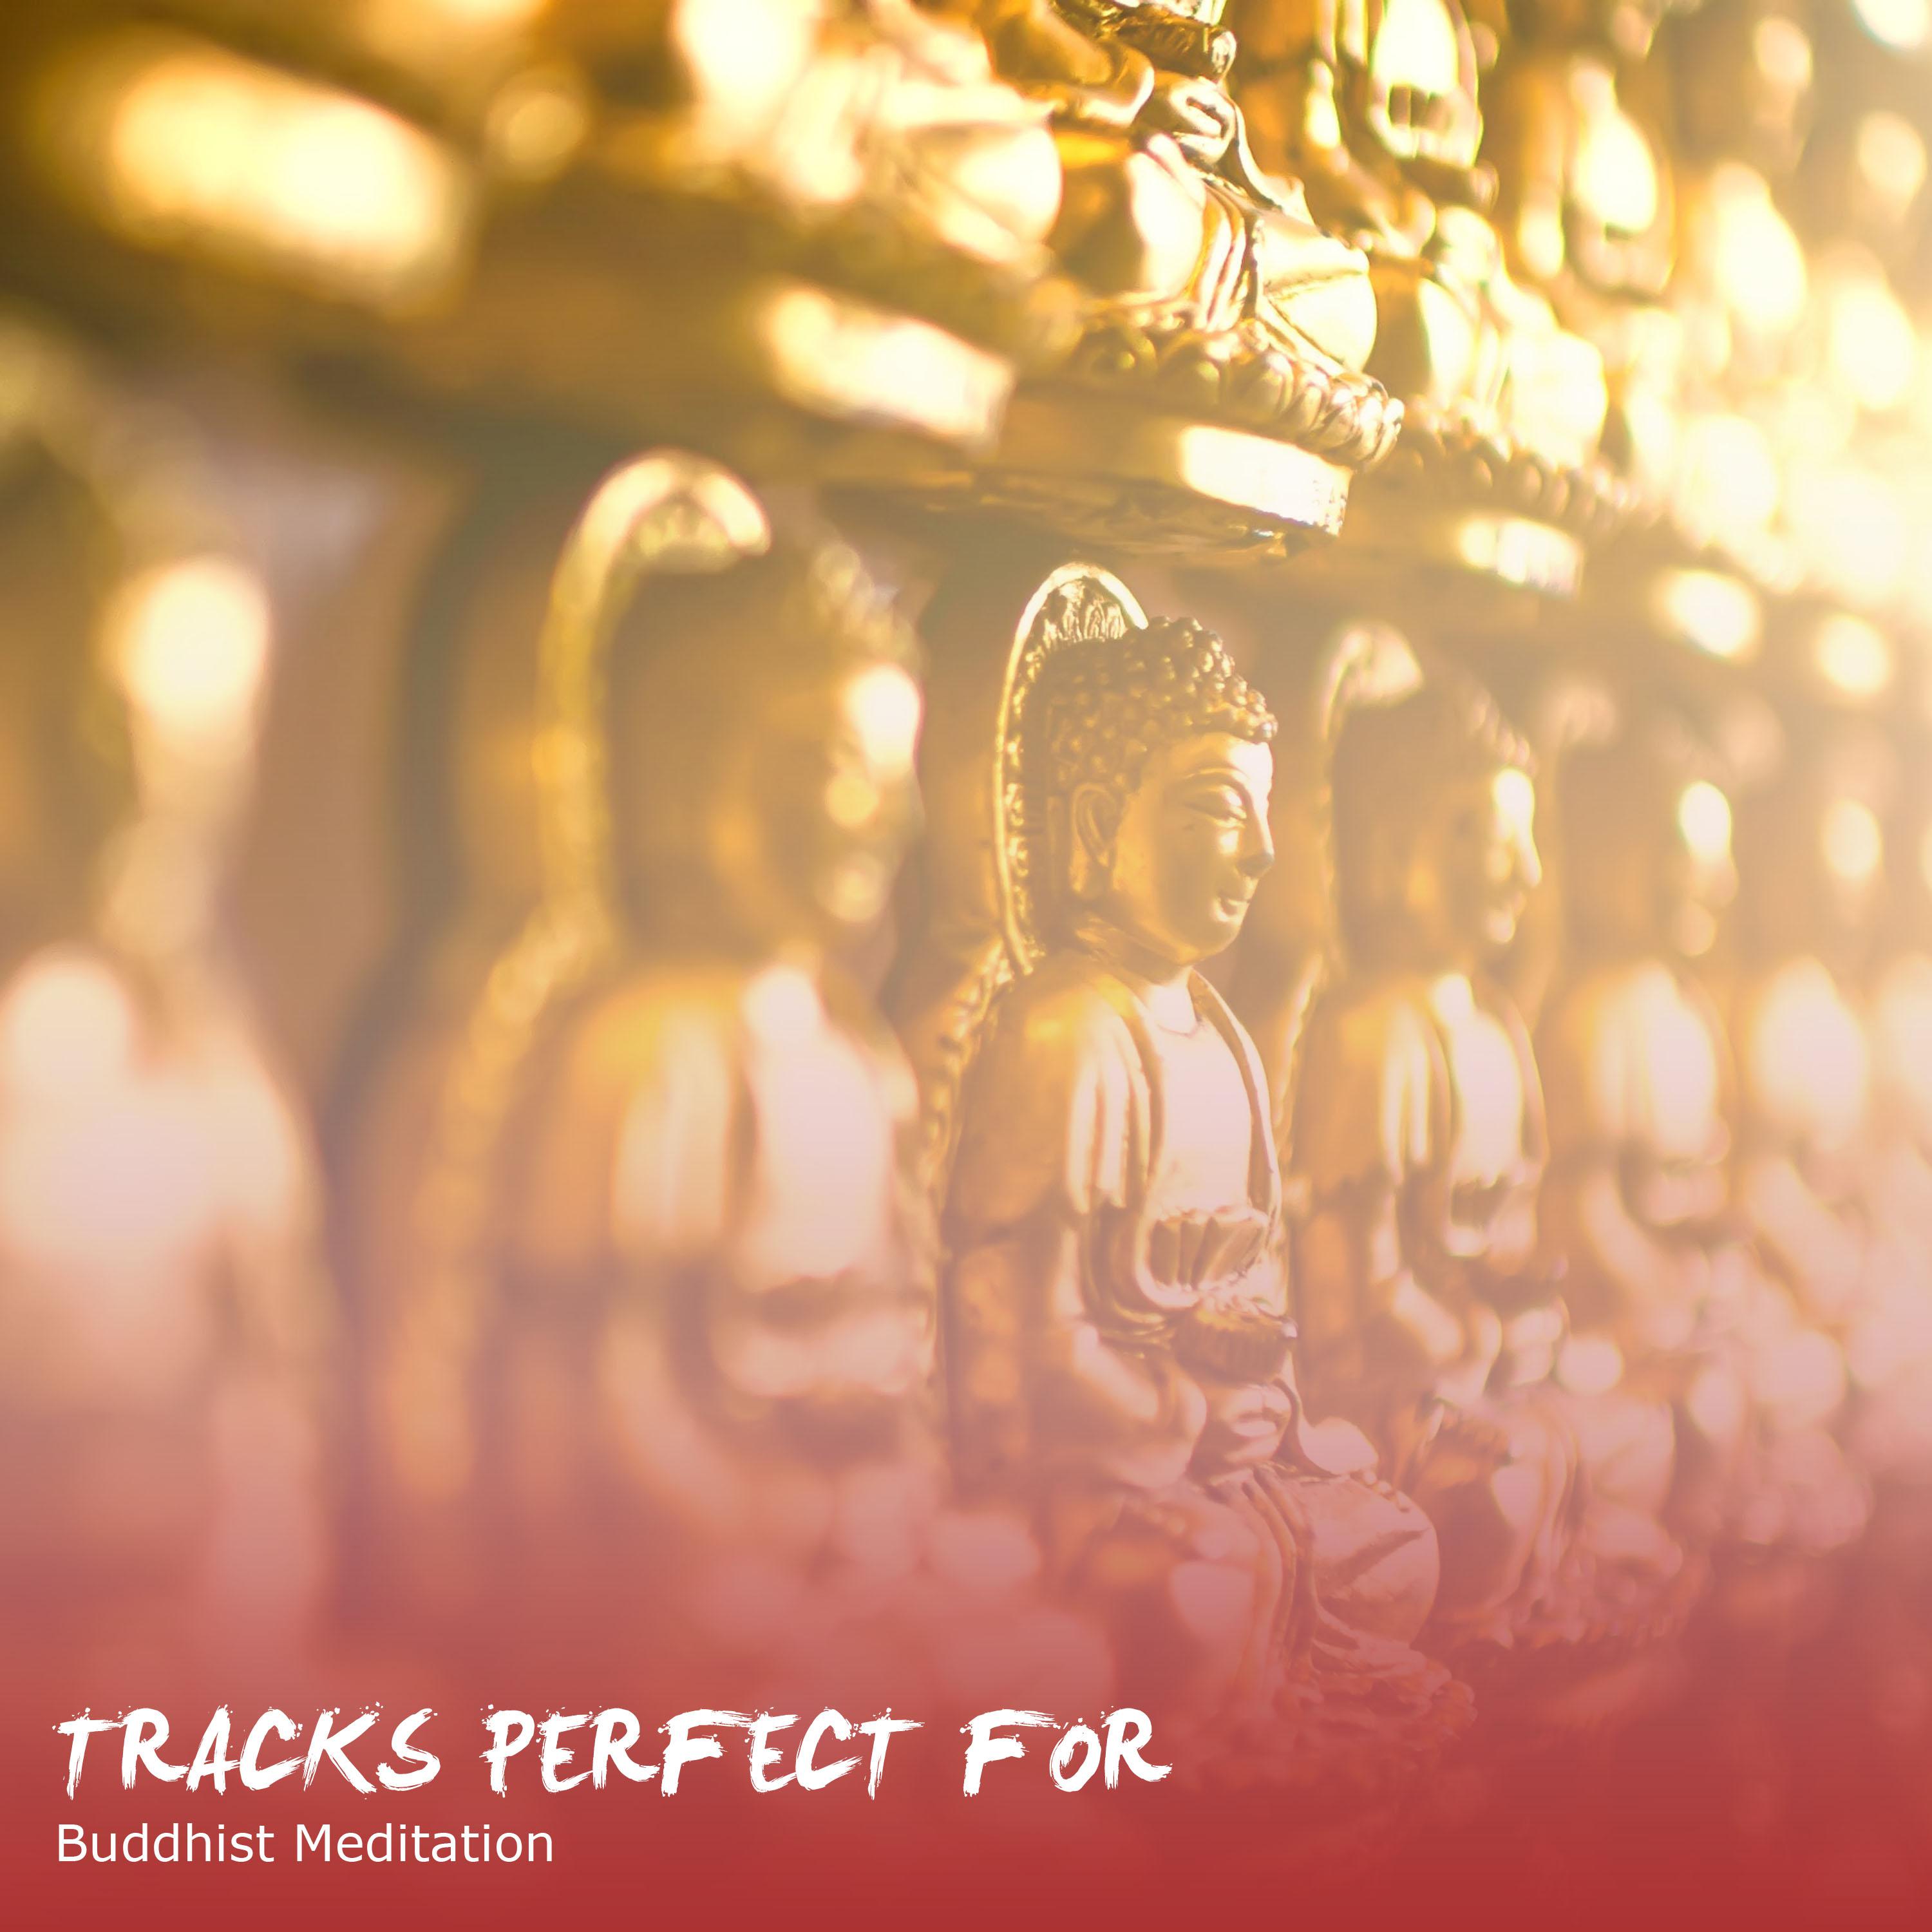 13 Tracks Perfect for Buddhist Meditation